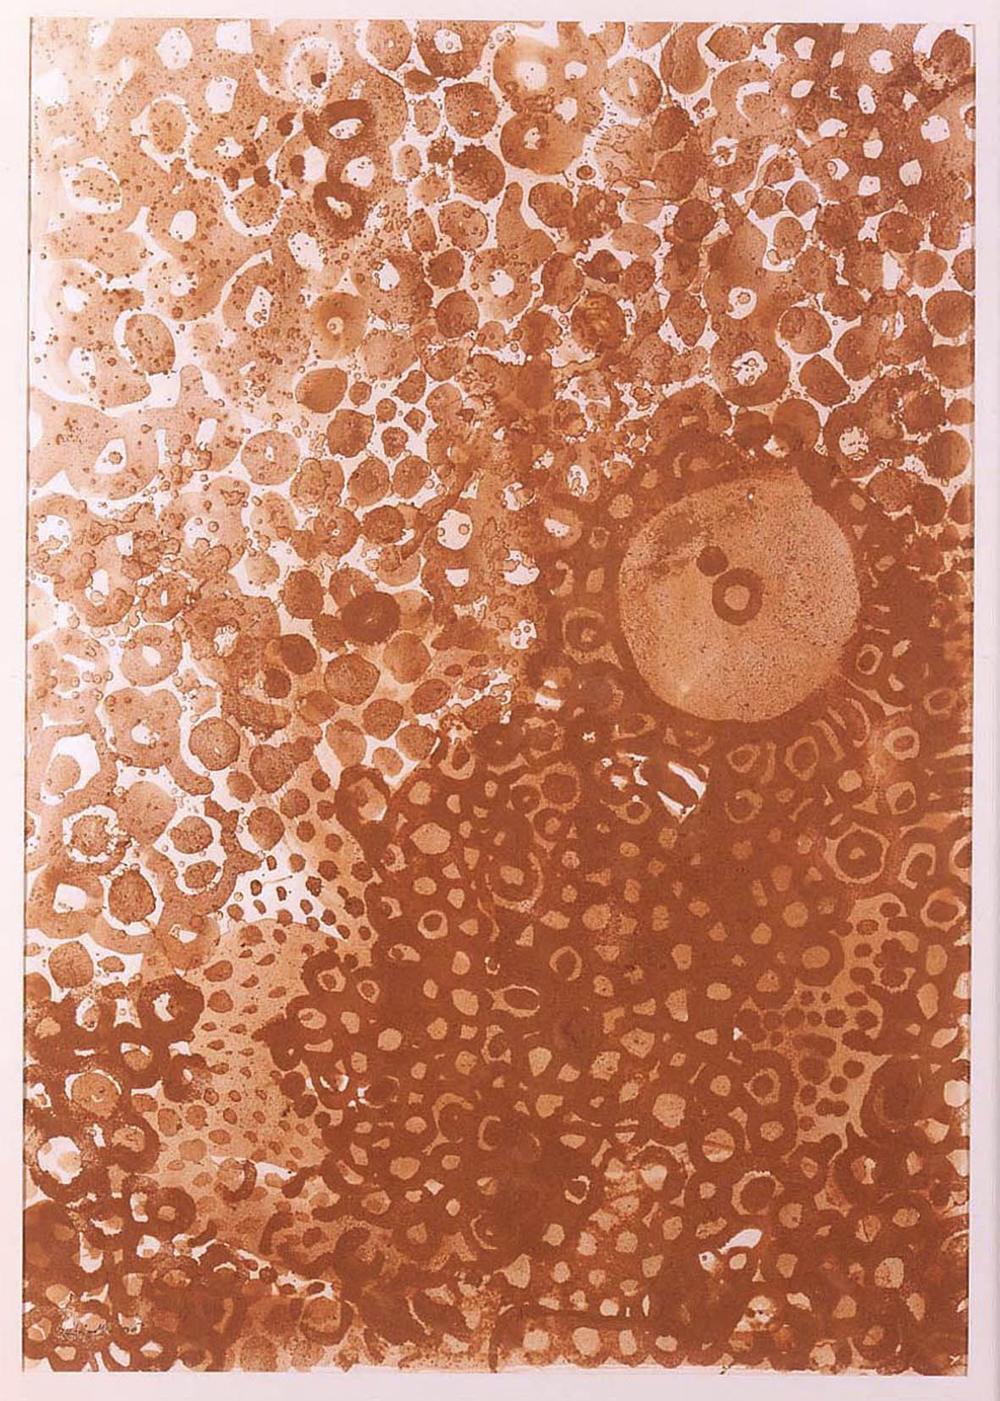 Luigi Mainolfi, Polveri, 1999, sabbia e tecnica mista su carta cm 100x70